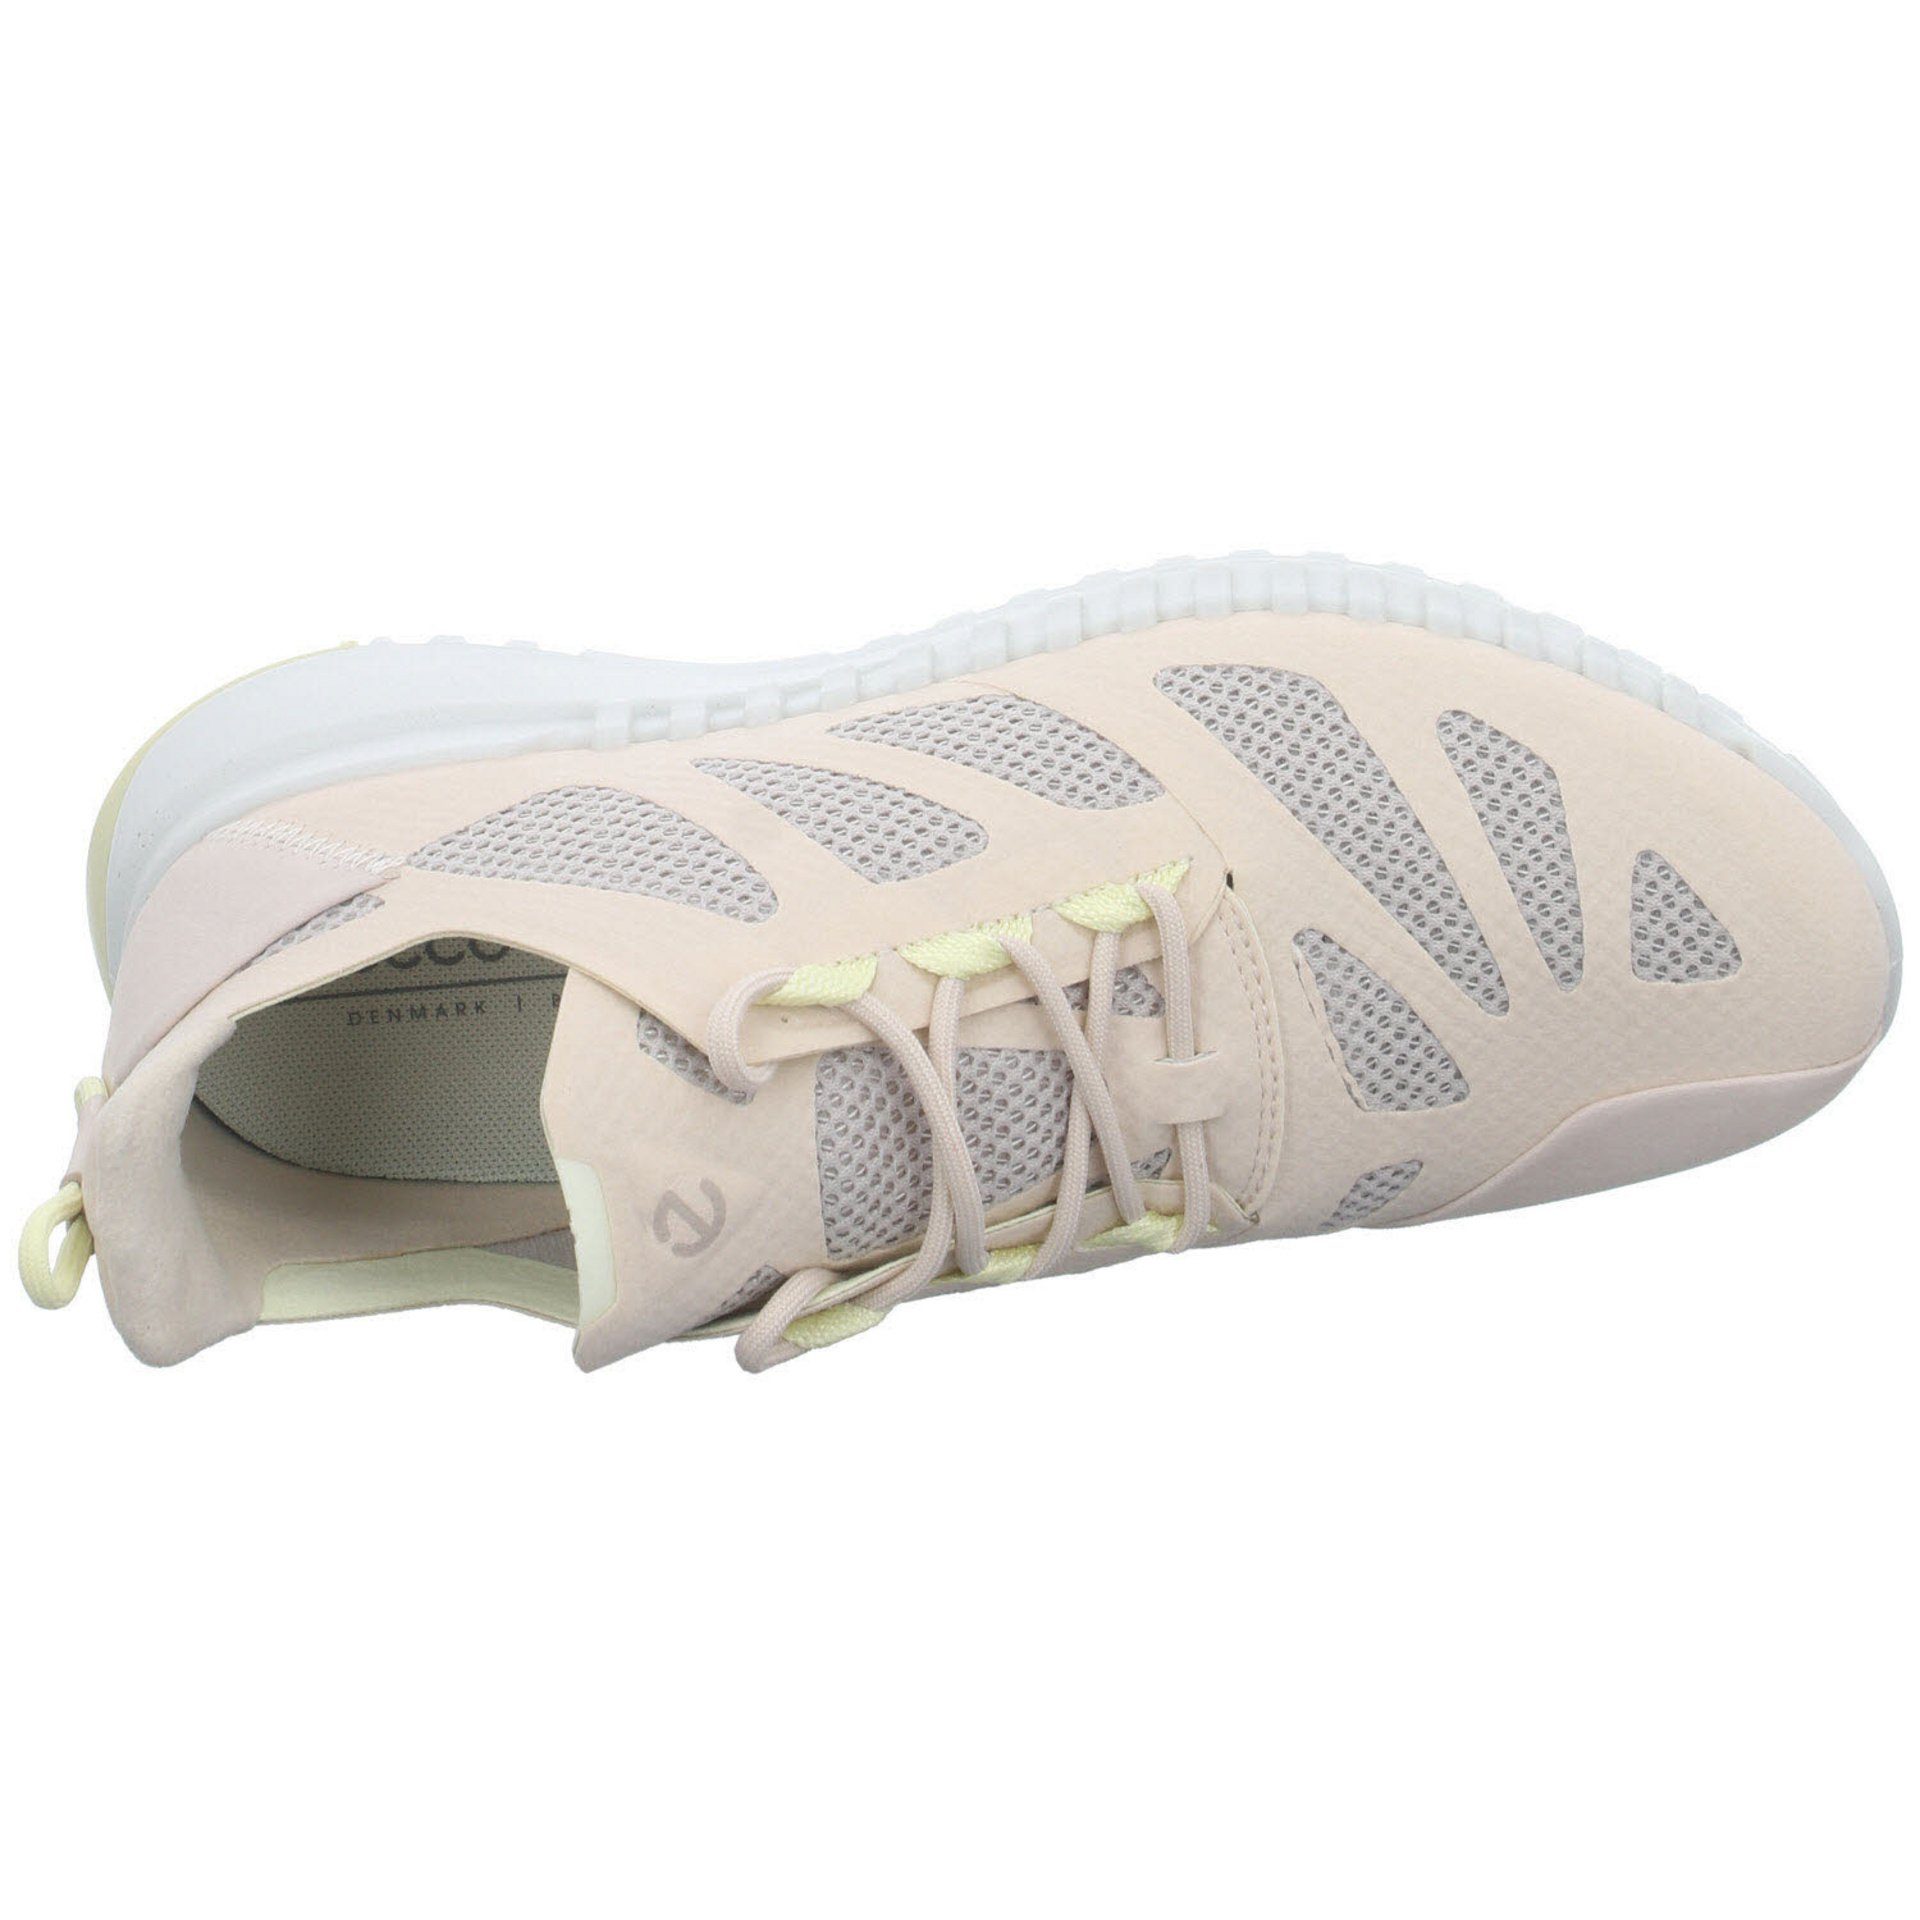 Schnürschuh Zipflex Sneaker Leder-/Textilkombination Ecco limestone/limestone Schuhe Damen Sneaker